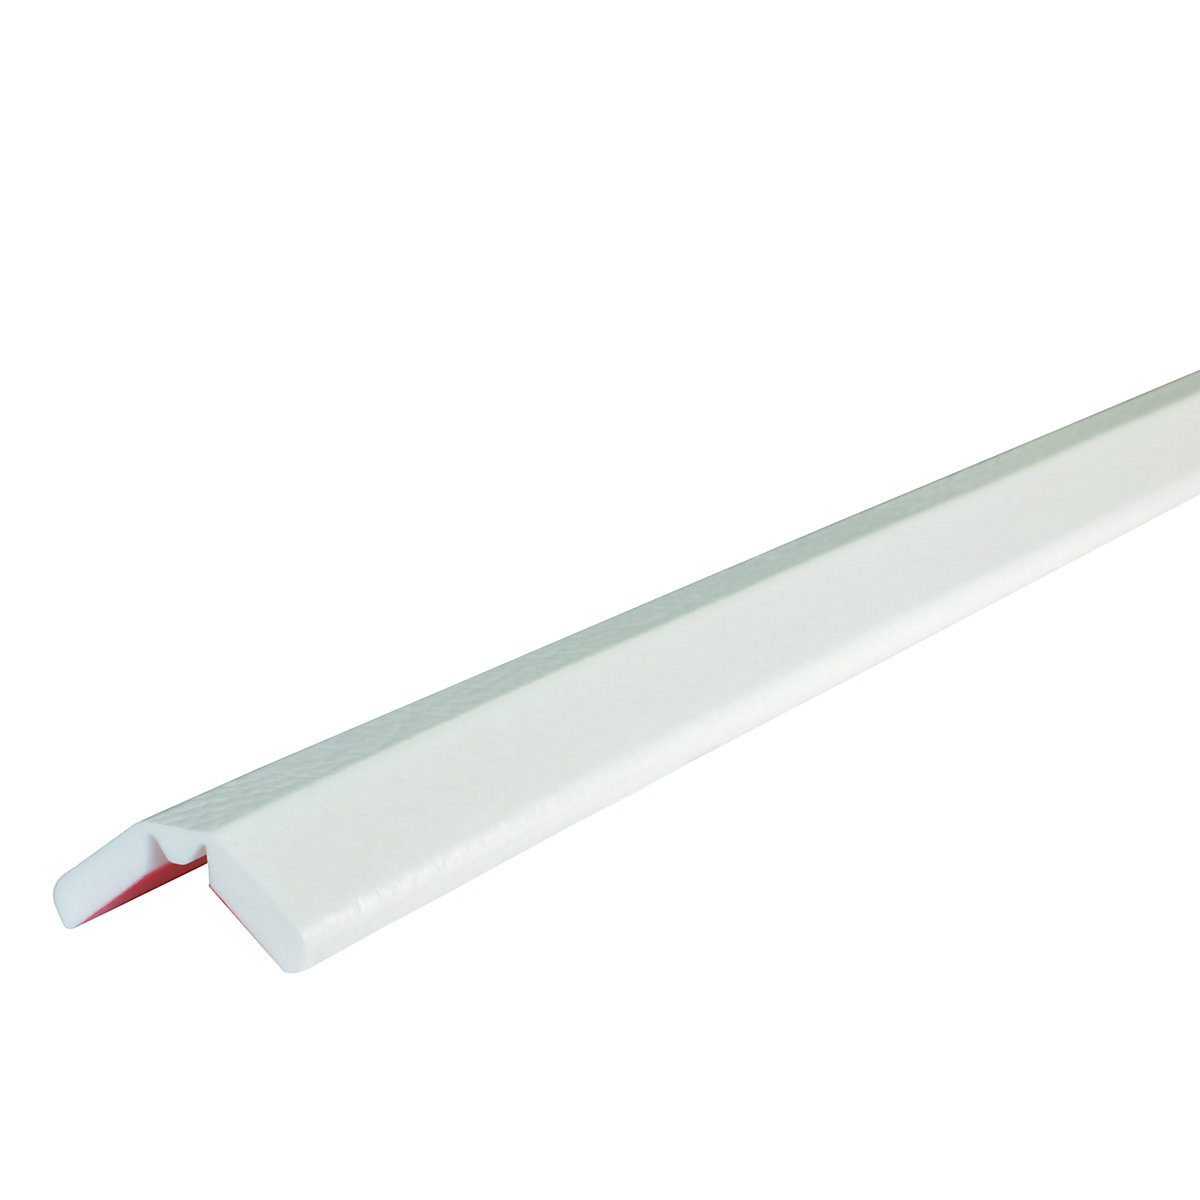 Knuffi® corner protection – SHG, type W, 1 m piece, white-12